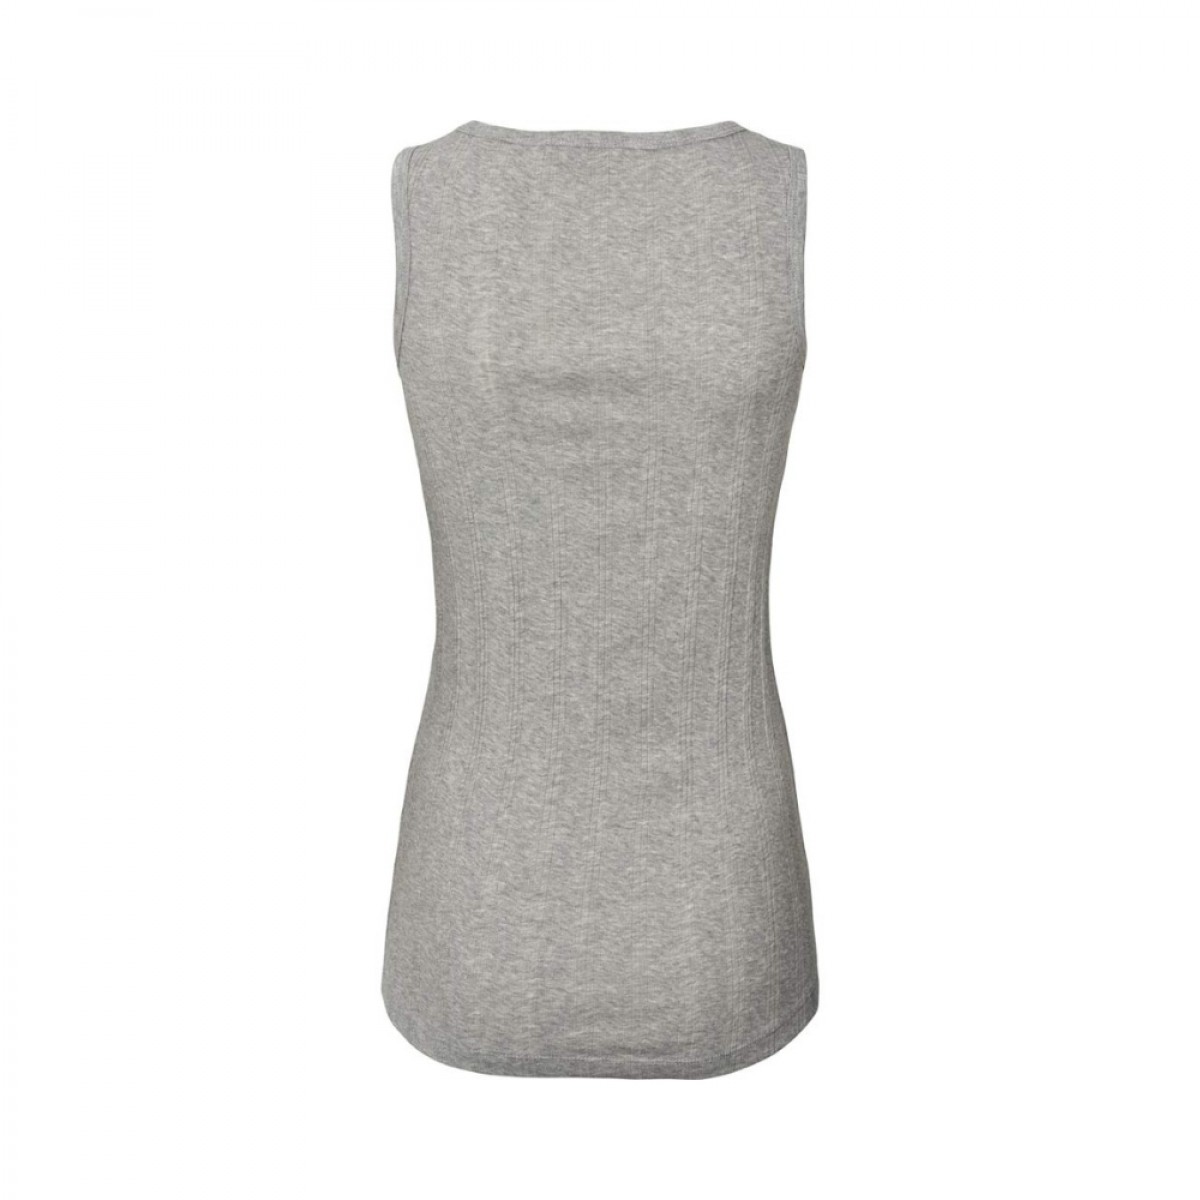 alberte cotton top - light grey melange - ryg